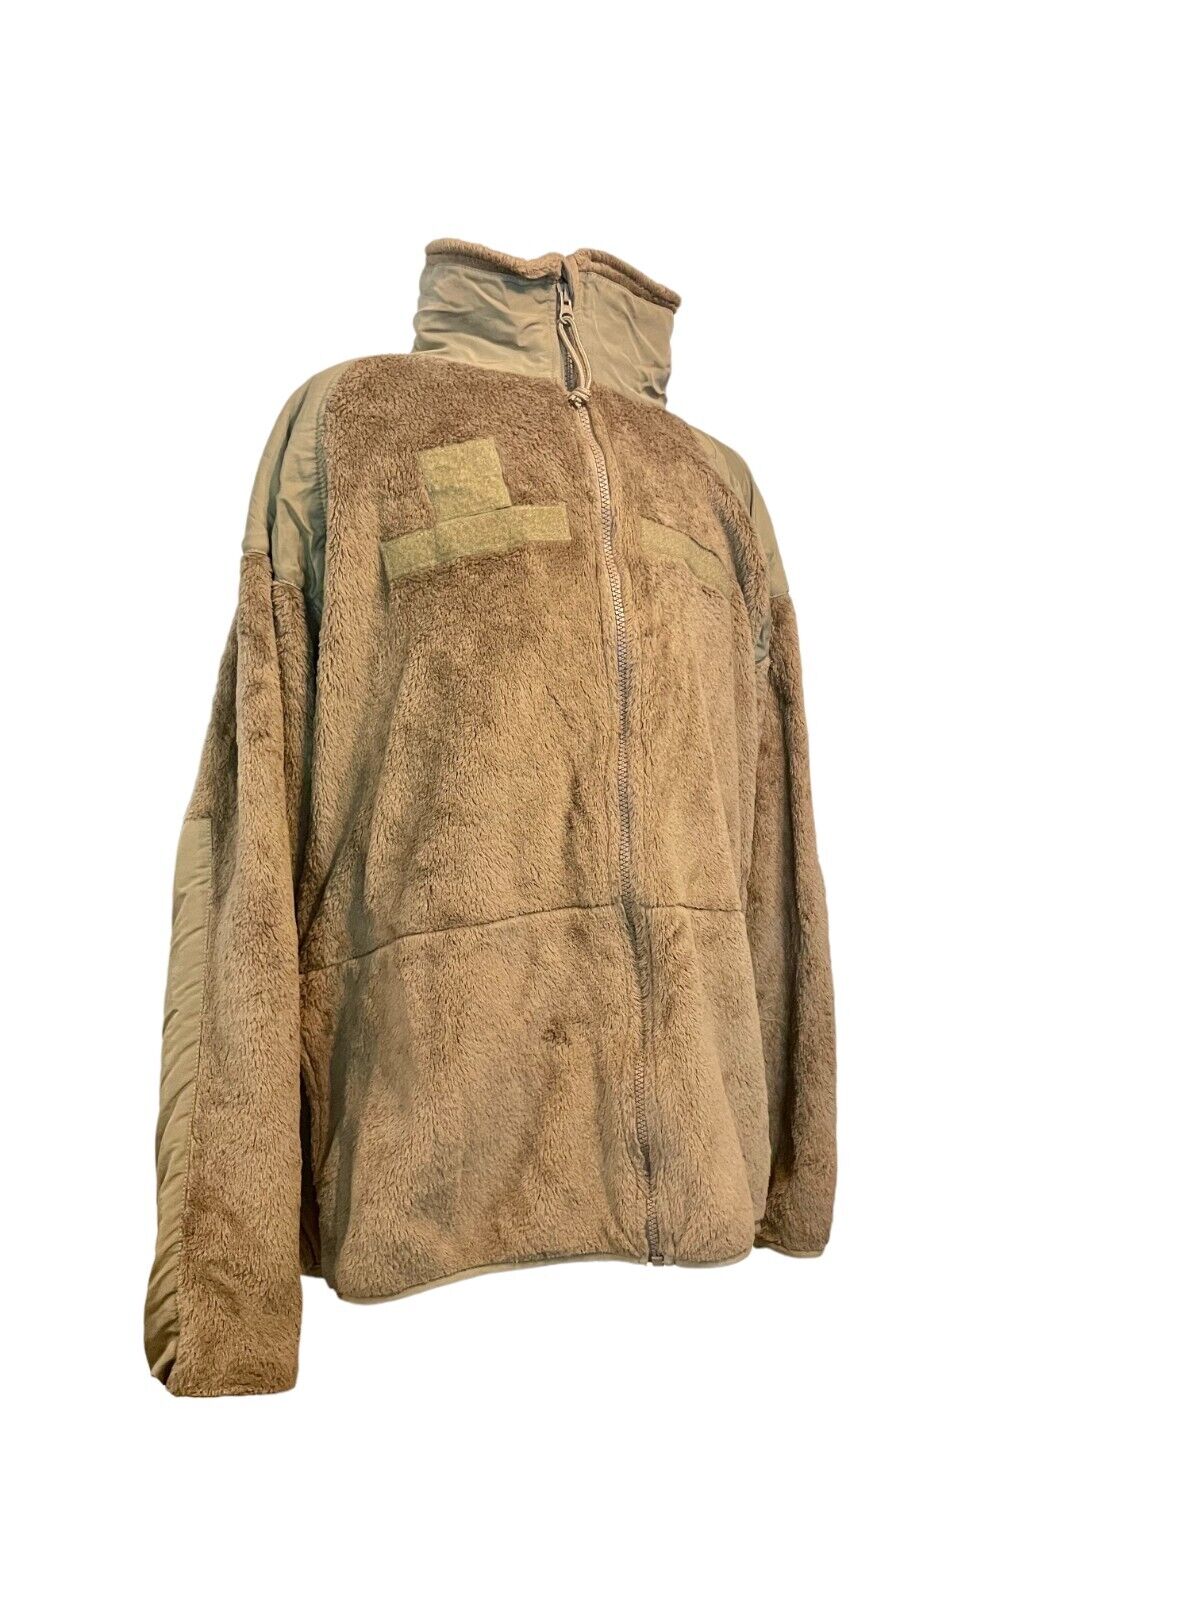 US Military Gen III Polartec 100 Cold Weather Fleece Jacket COYOTE BROWN Small R